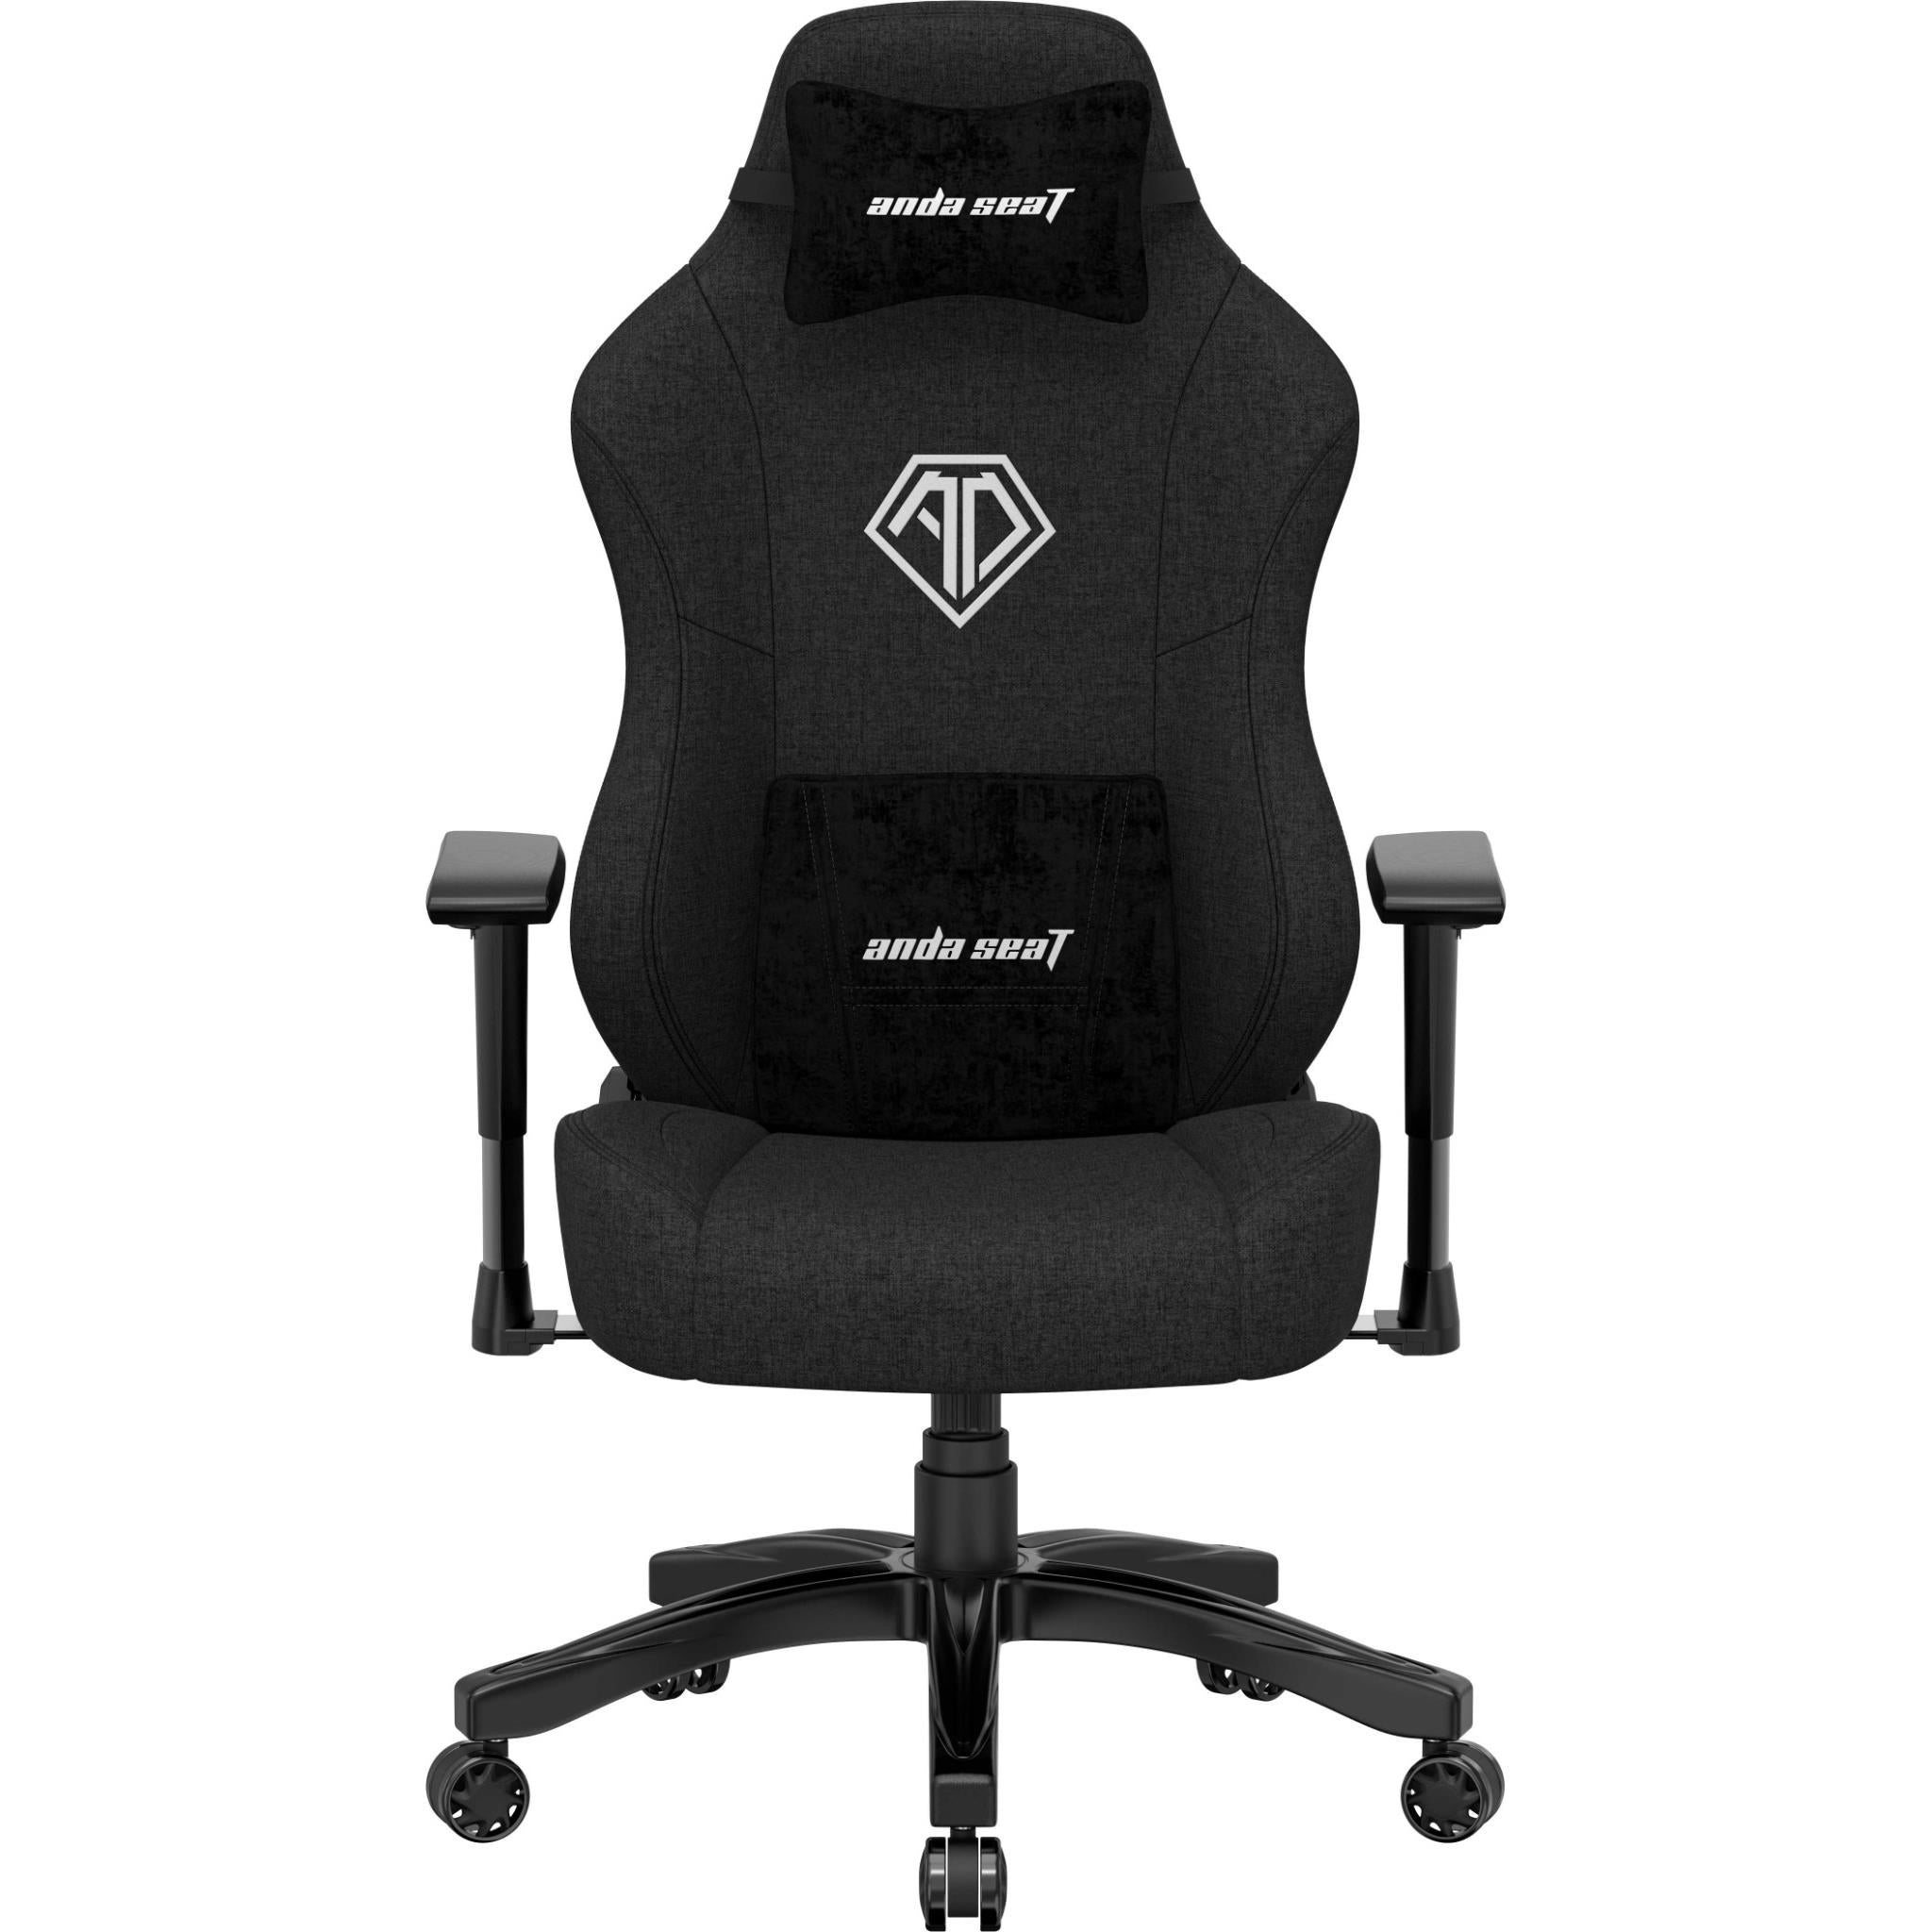 anda seat phantom 3 gaming chair black fabric (large)